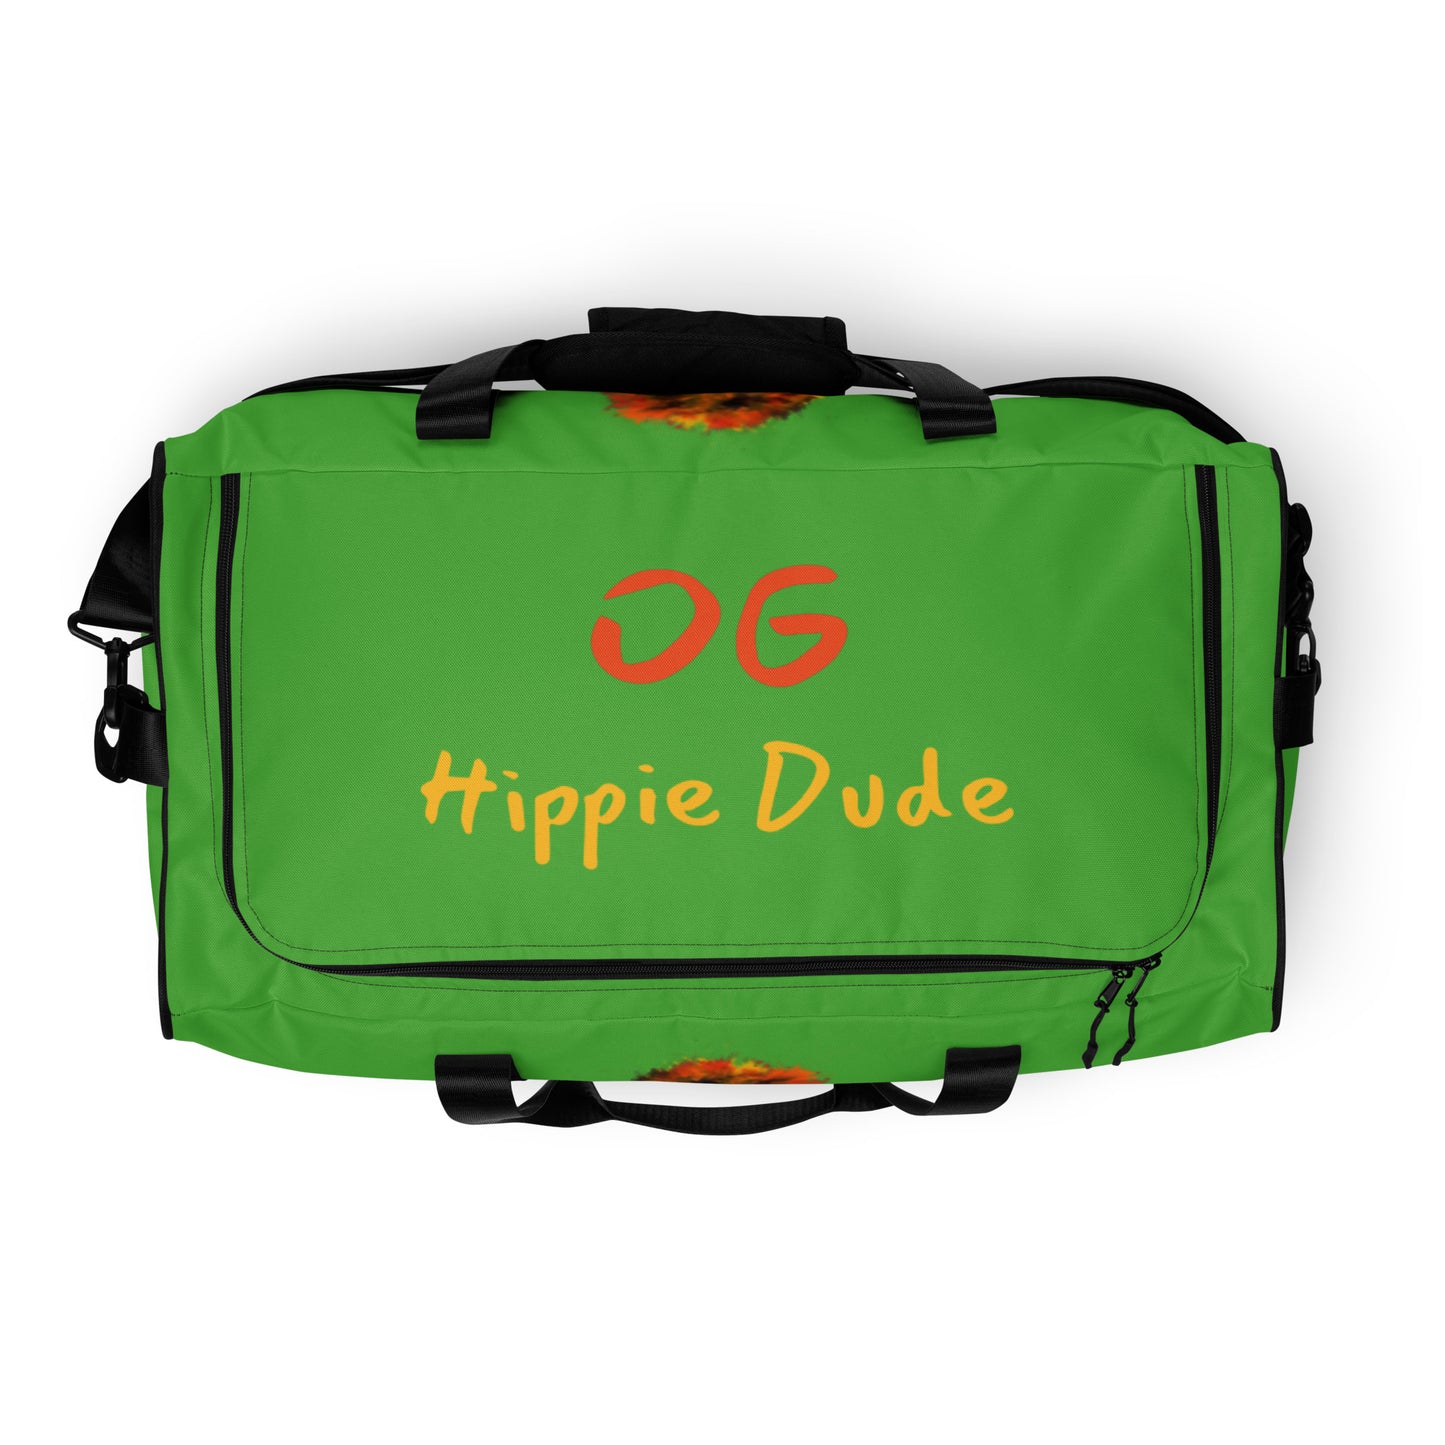 Grinch Duffle Bag - OG Hippie Dude